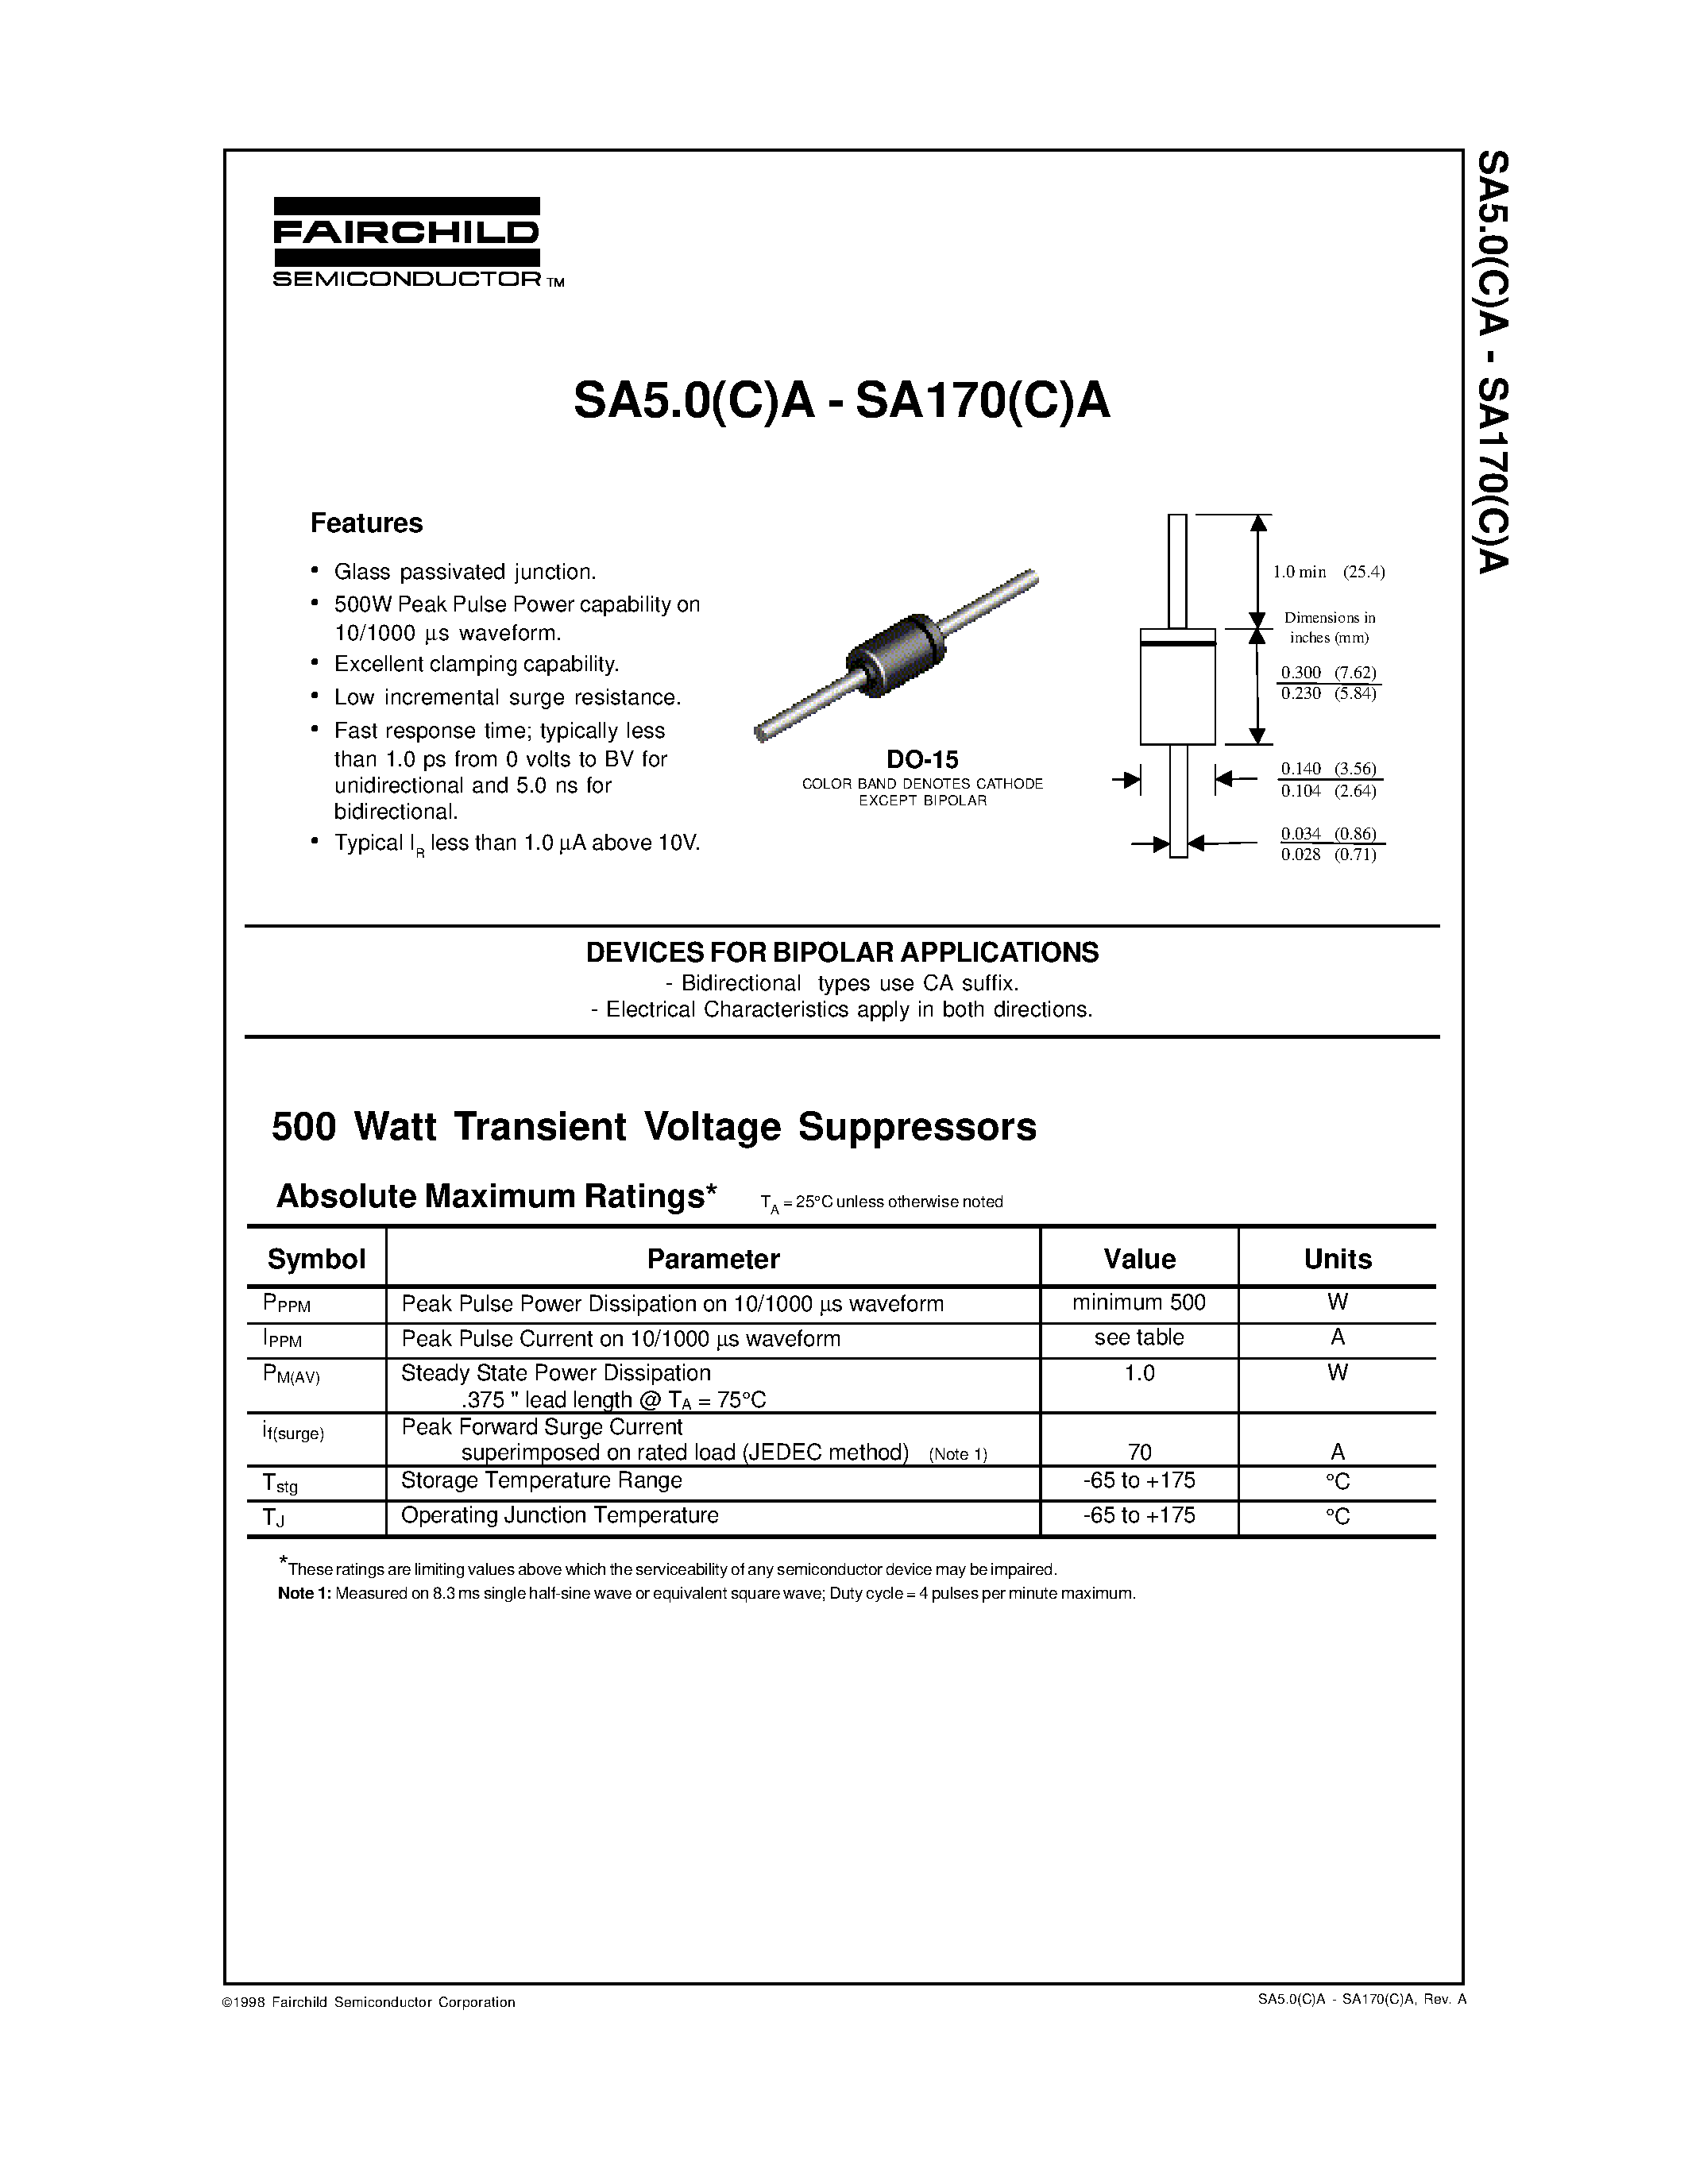 Даташит SA28(C)A - DEVICES FOR BIPOLAR APPLICATIONS страница 1